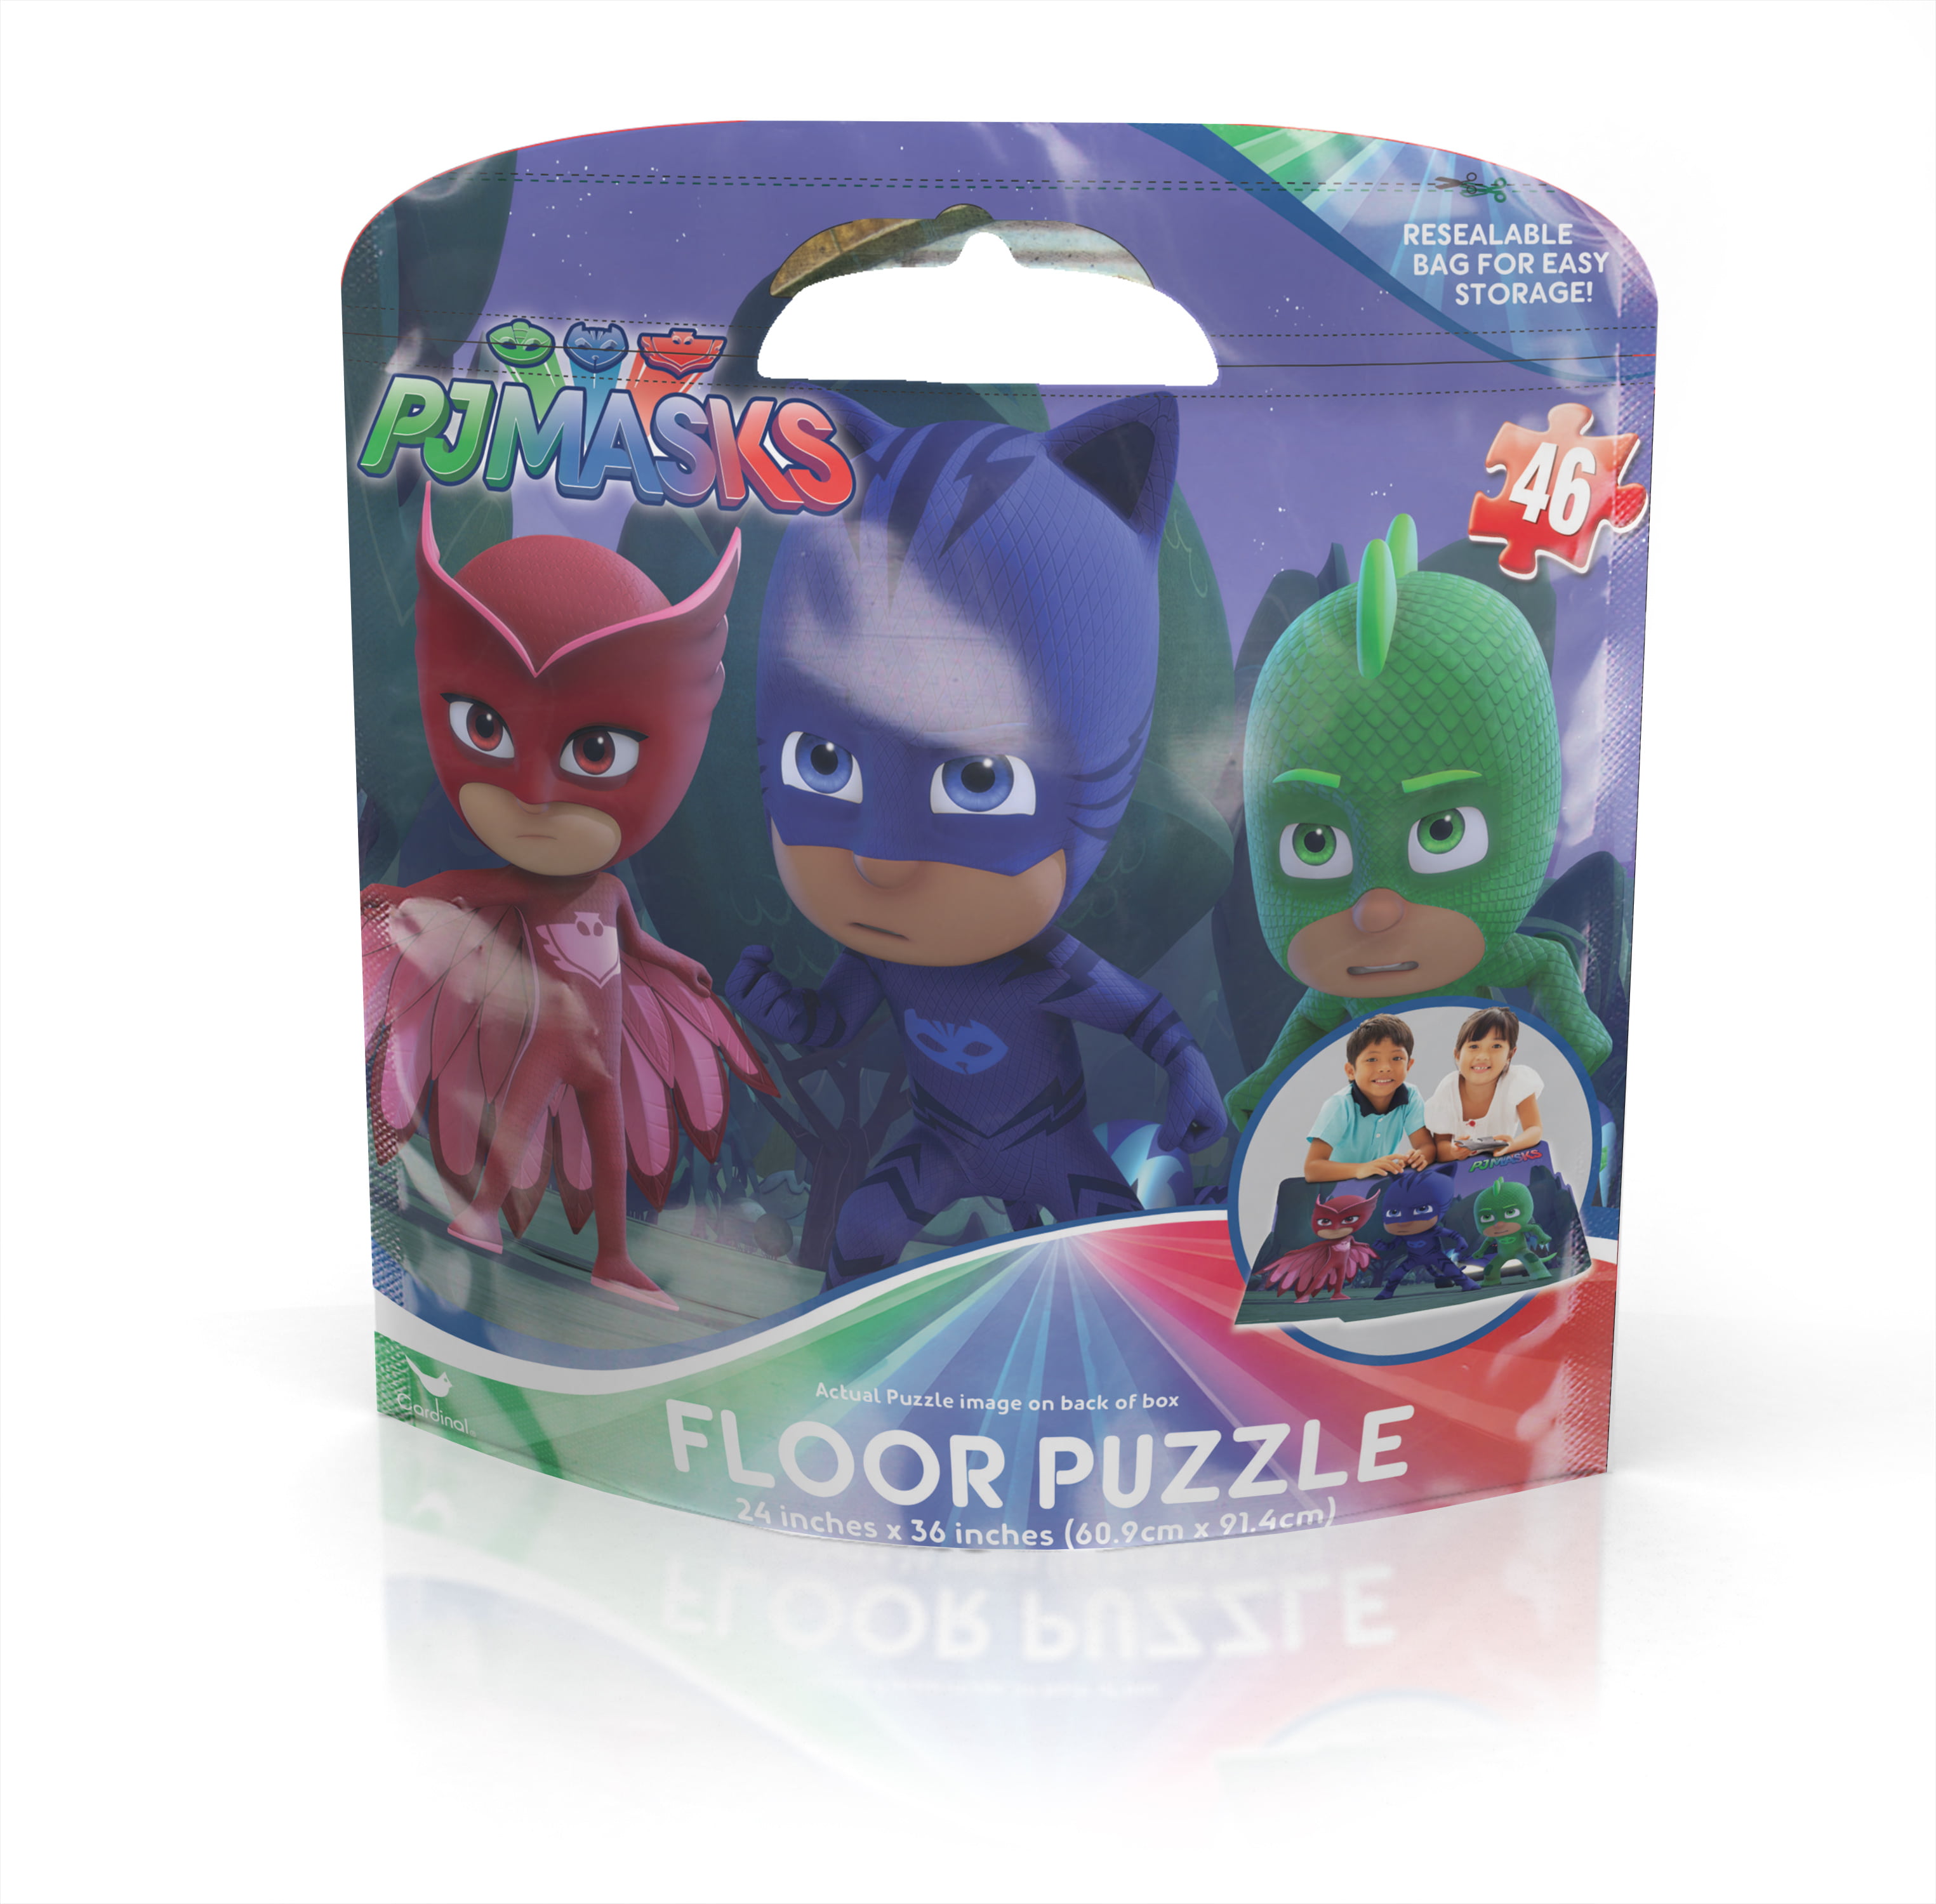 Pj Masks Disney Jr PJ Masks Floor Puzzle Novelty Character Collectibl 46pc Set 